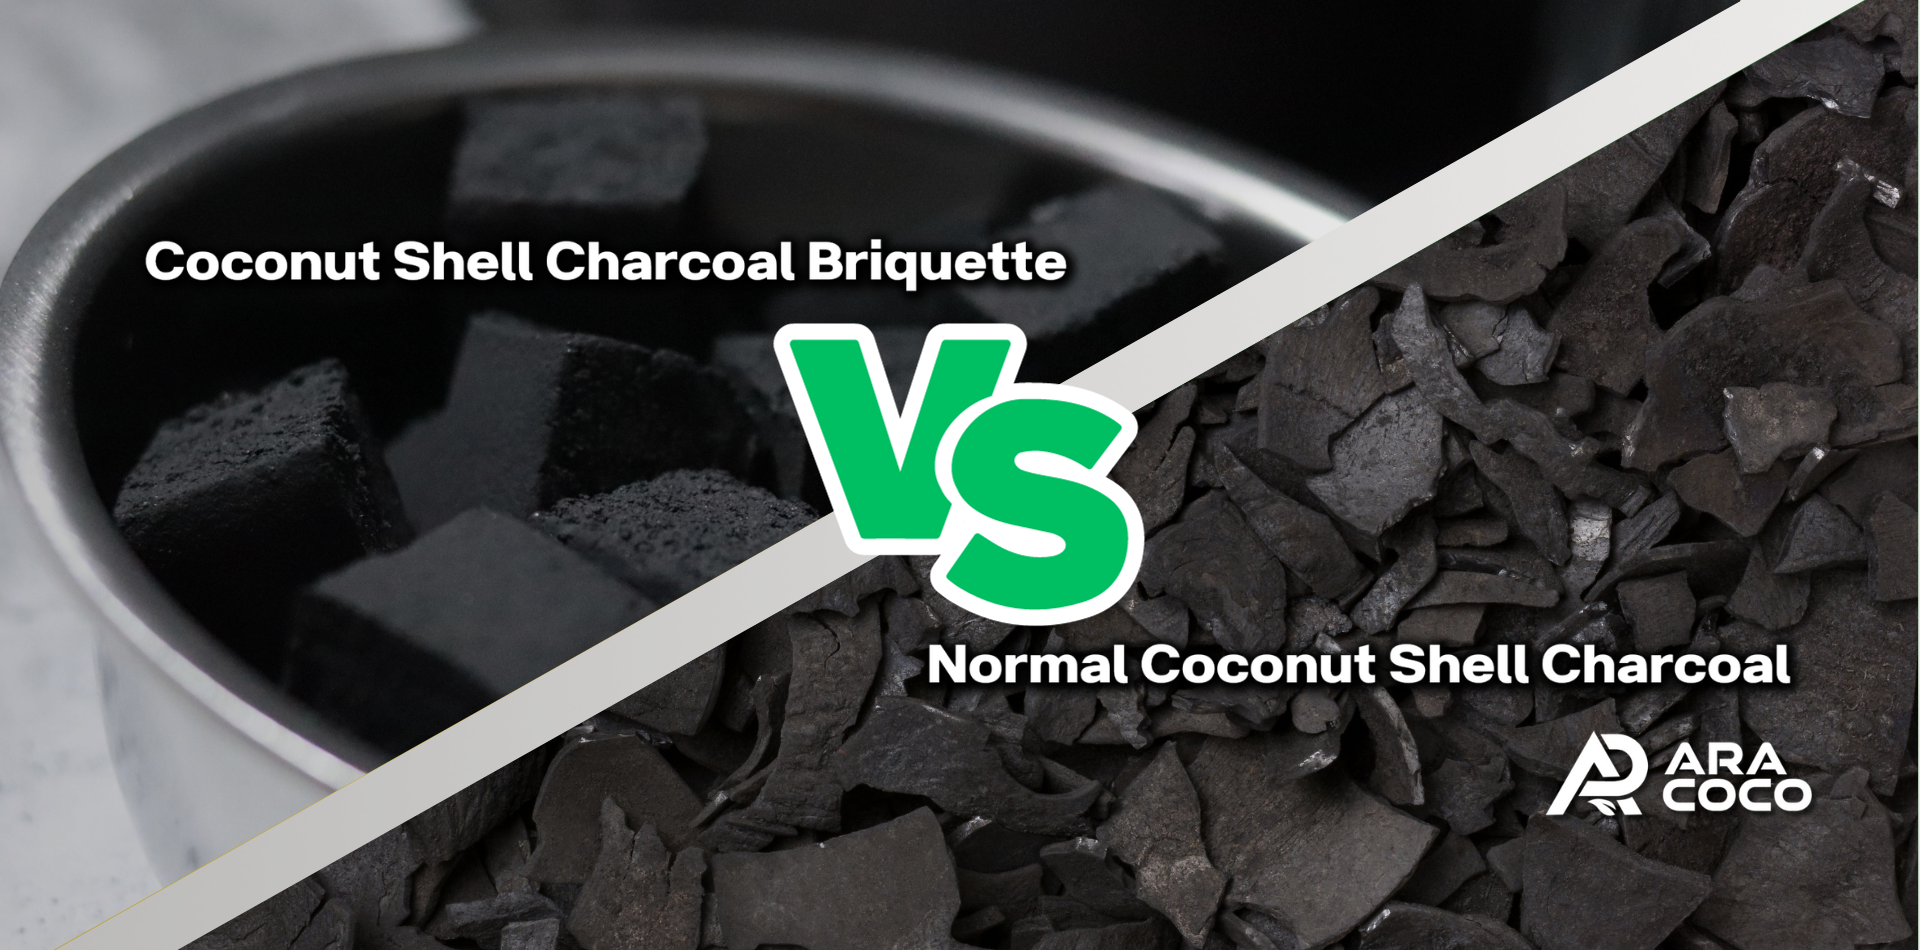 Coconut Shell Charcoal Briquette vs. Normal Coconut Shell Charcoal:<br />
Is Charcoal Briquette Necessary?